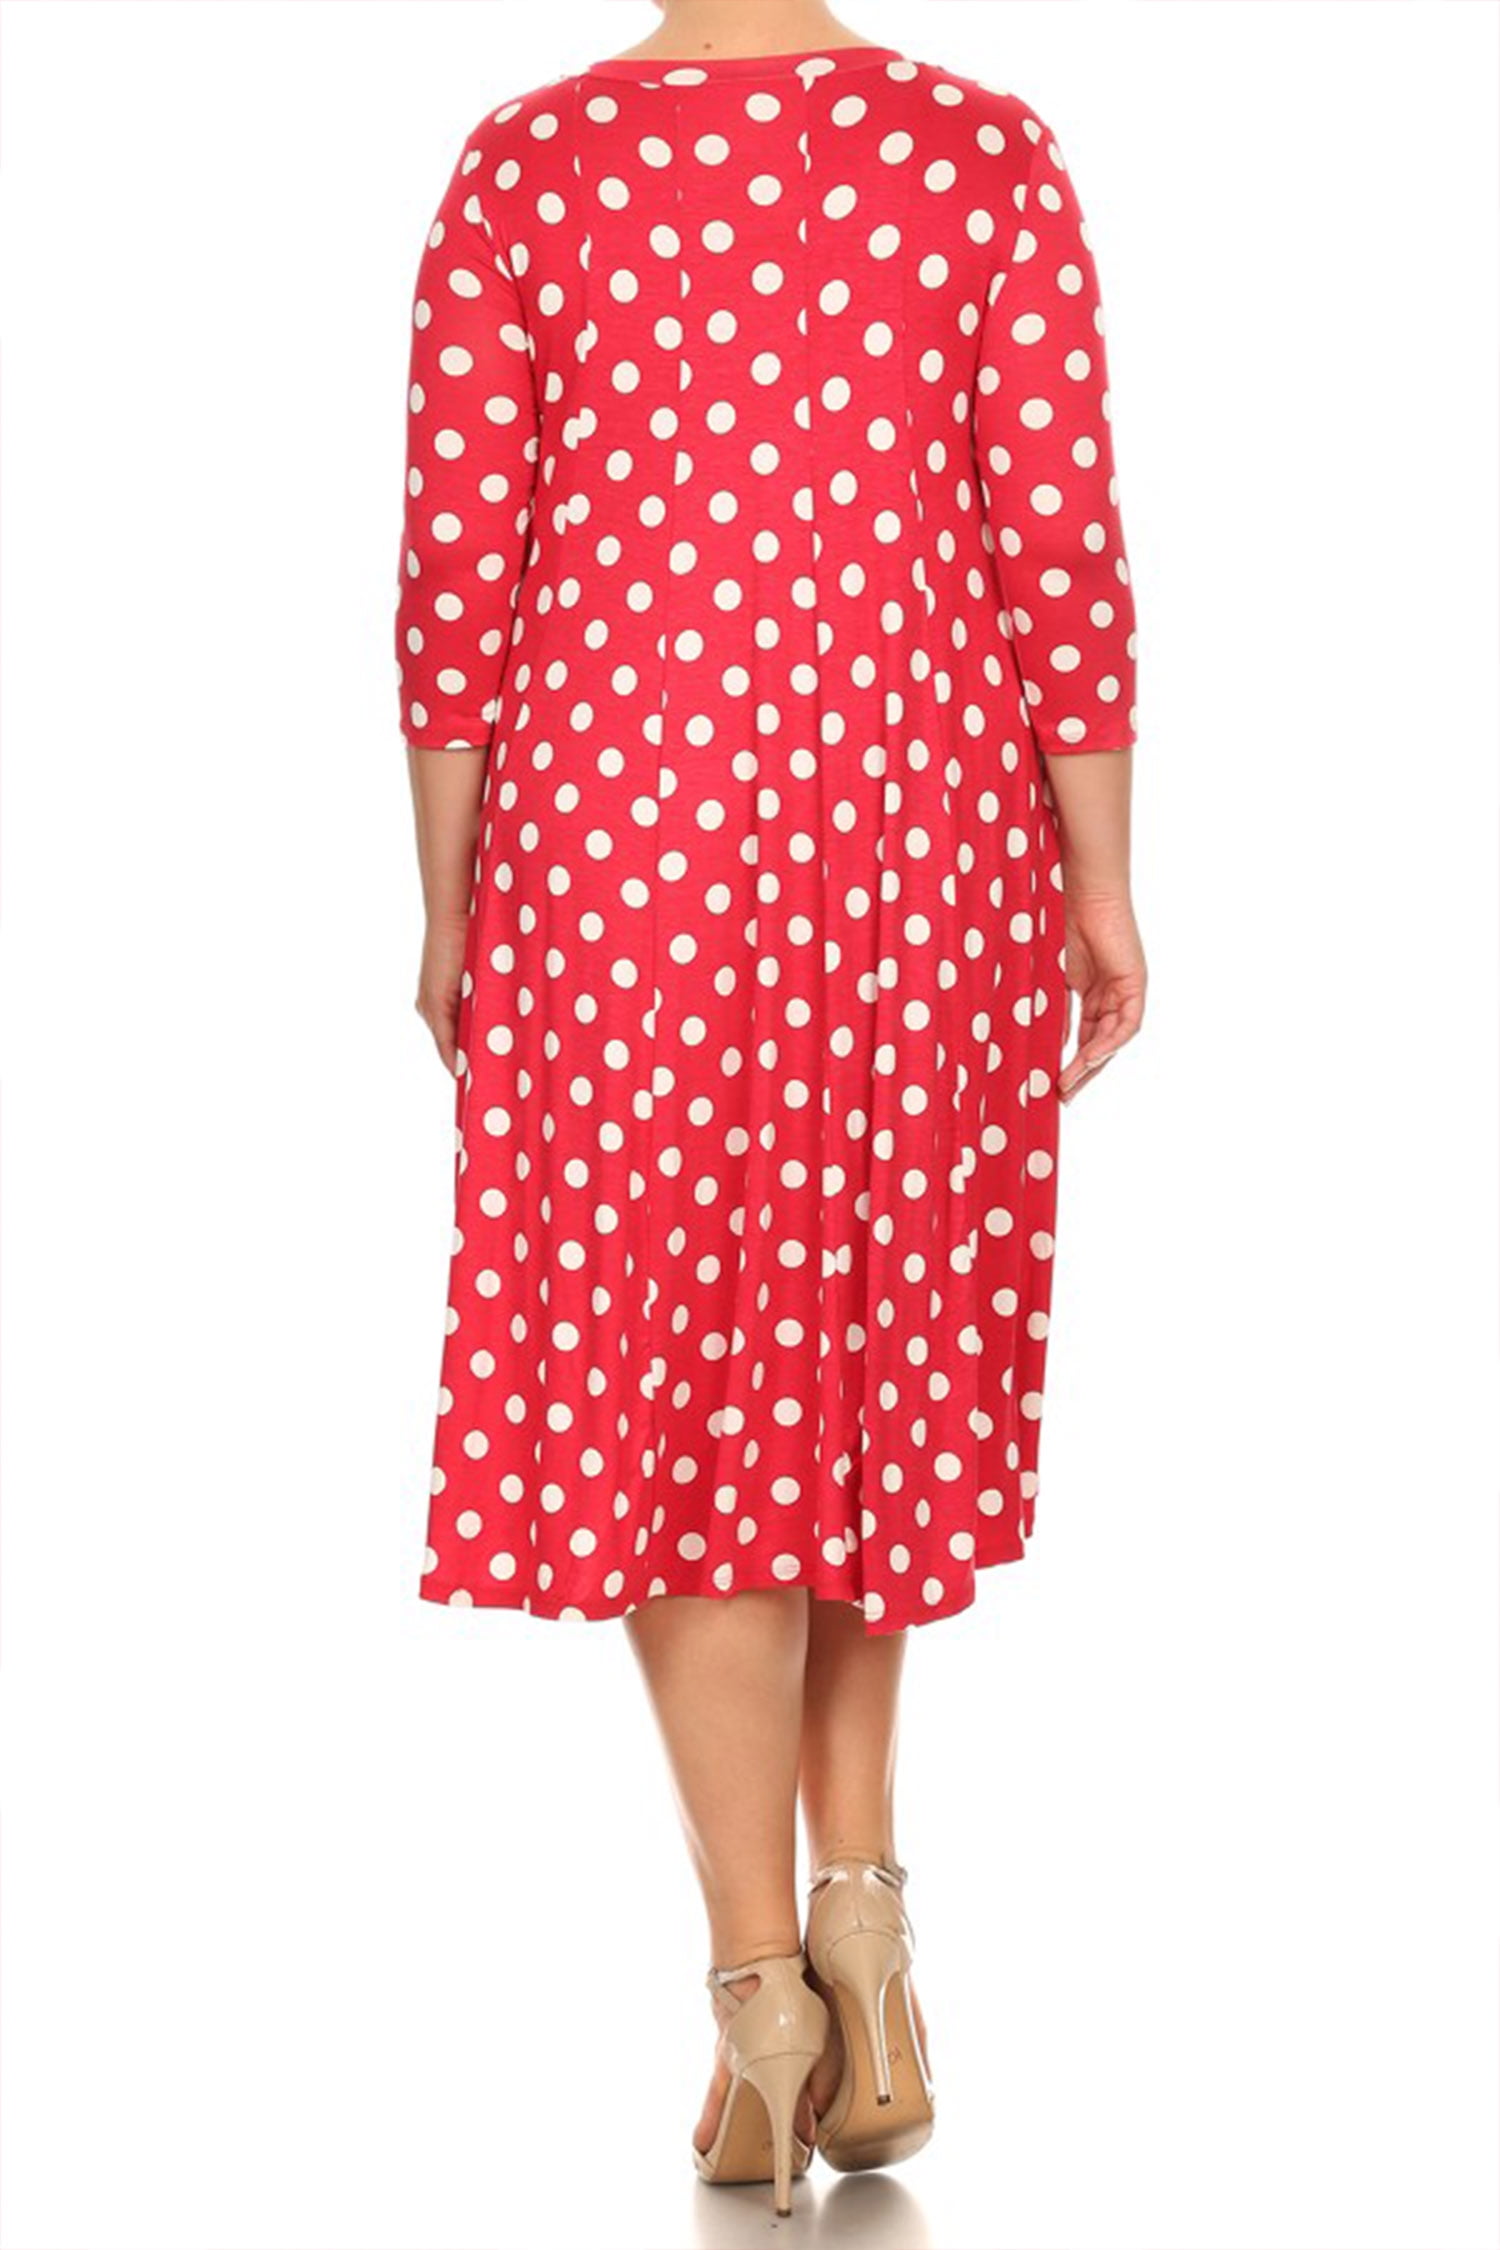 skrivestil Dejlig lektie Women's Plus Size Loose Fit Scoop Neck 3/4 Sleeve Polka Dot Patterned  A-Line Long Dress - Walmart.com